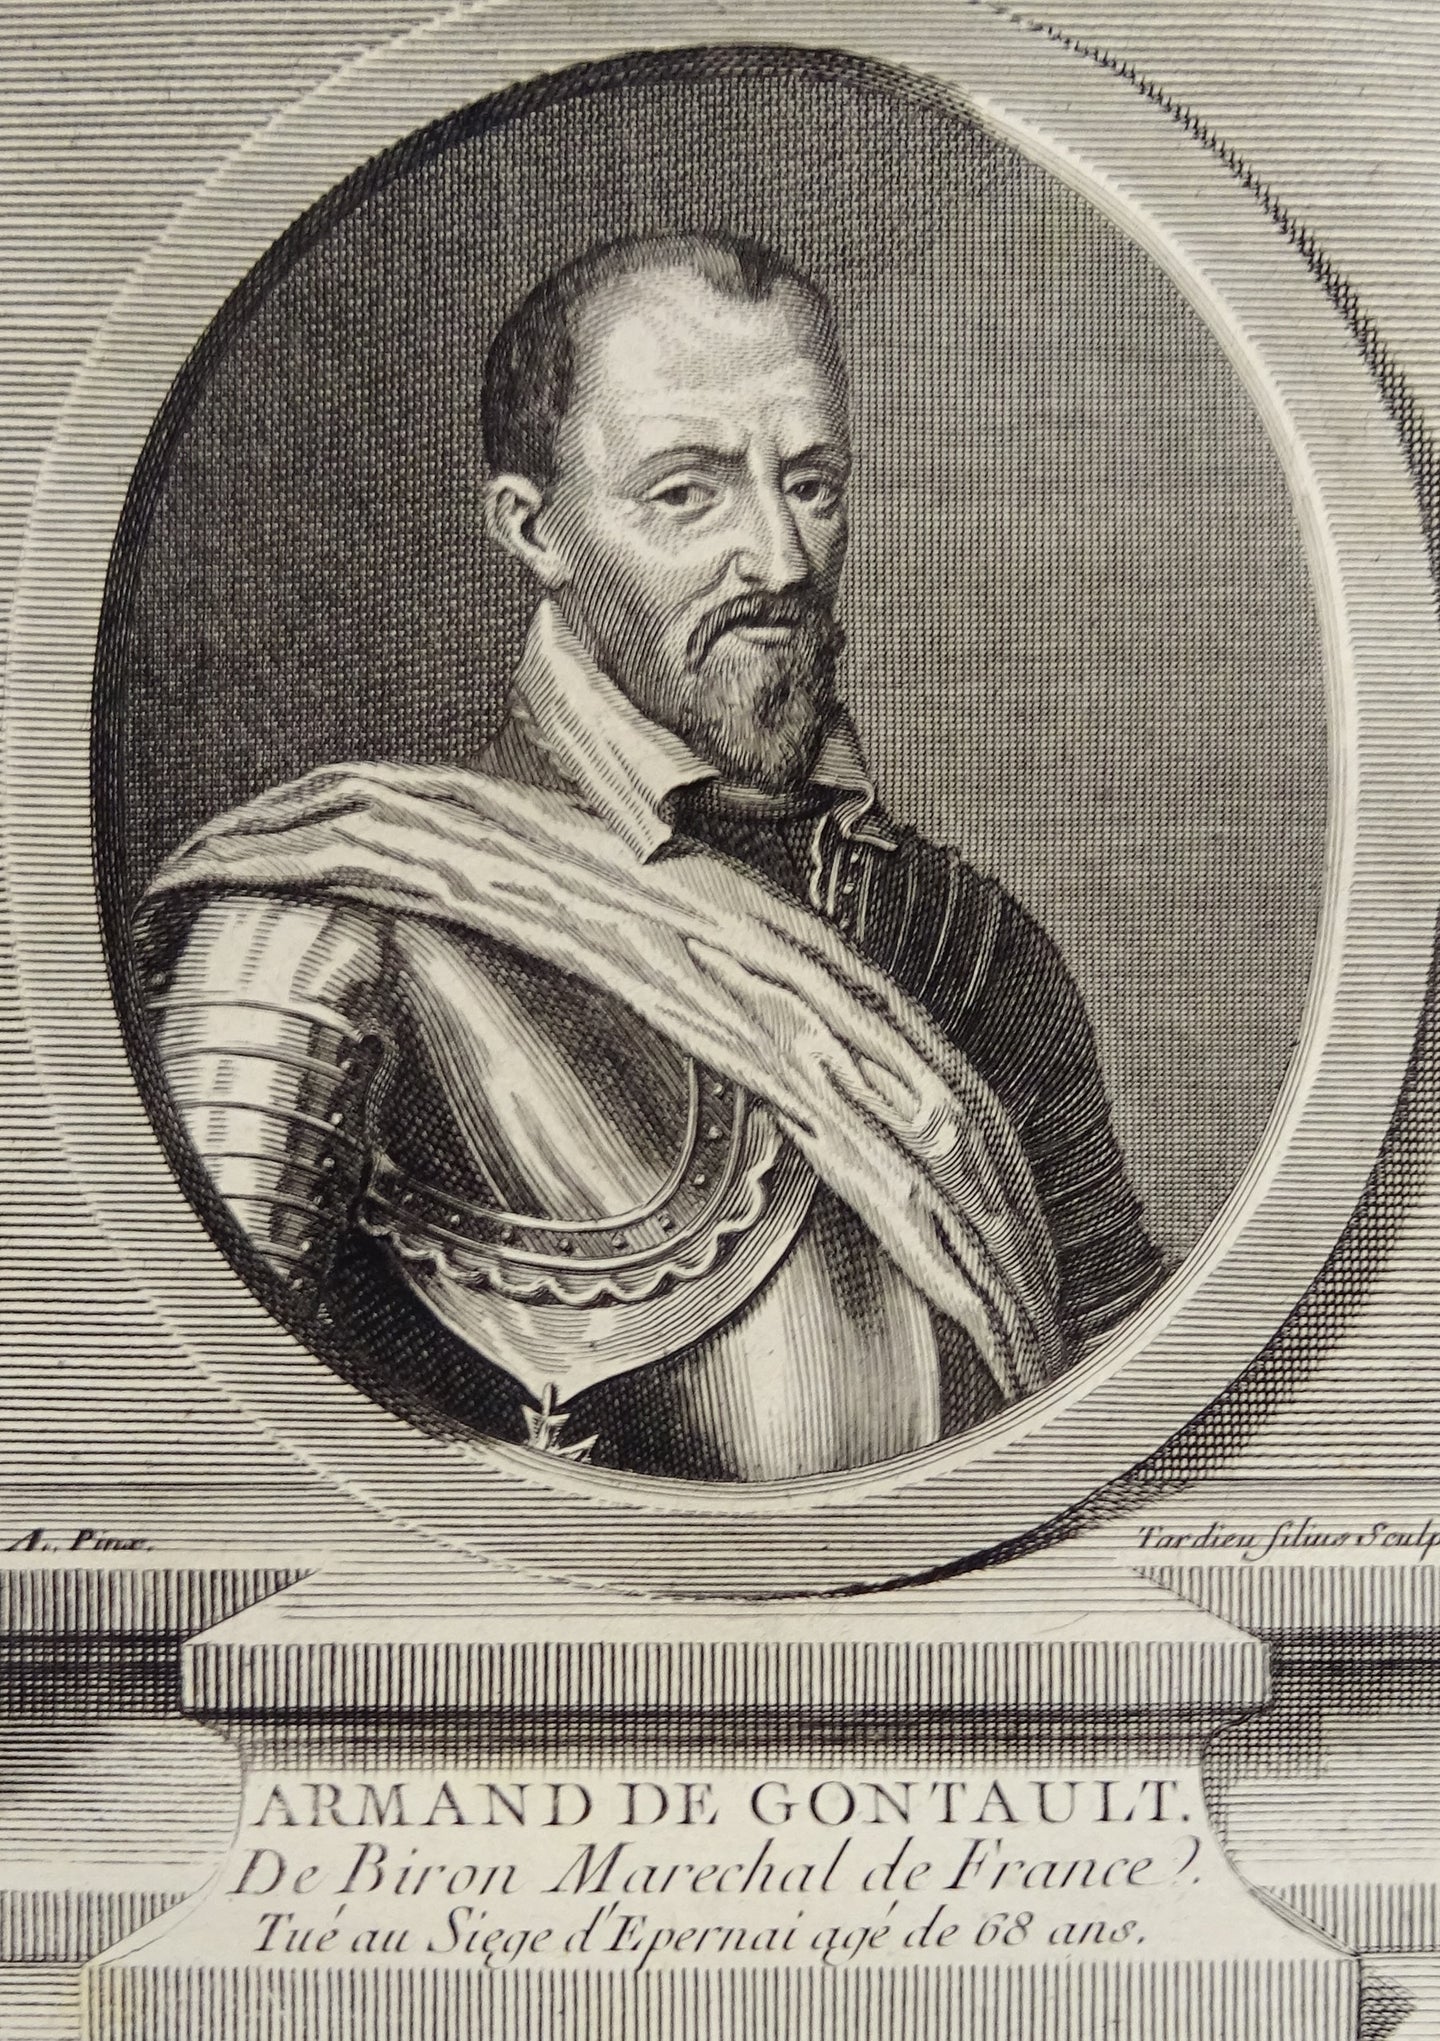 Armand de Gontault